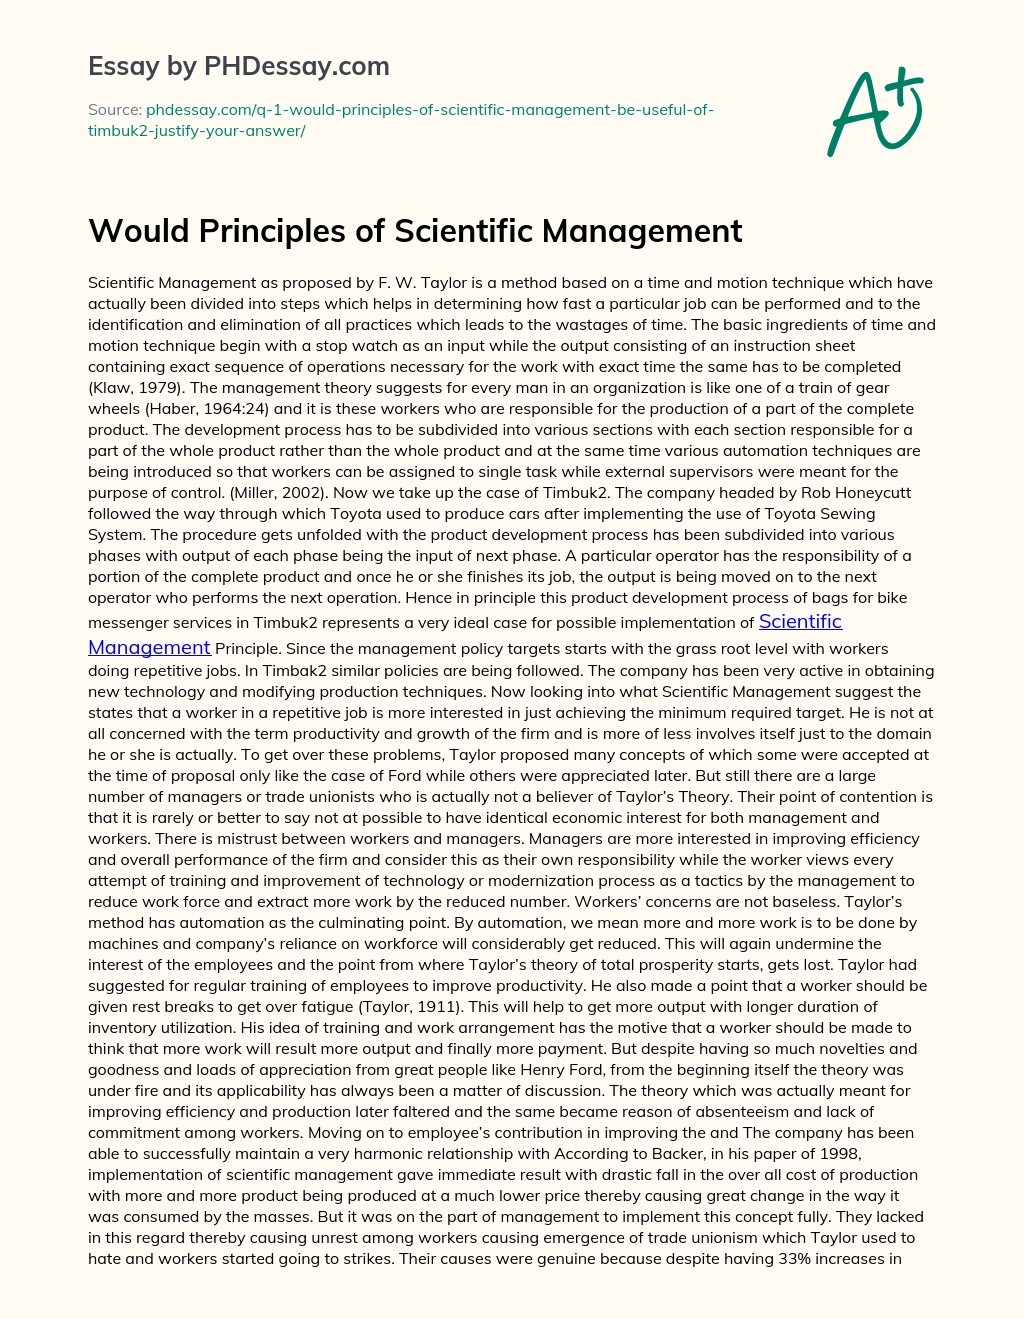 Would Principles of Scientific Management essay